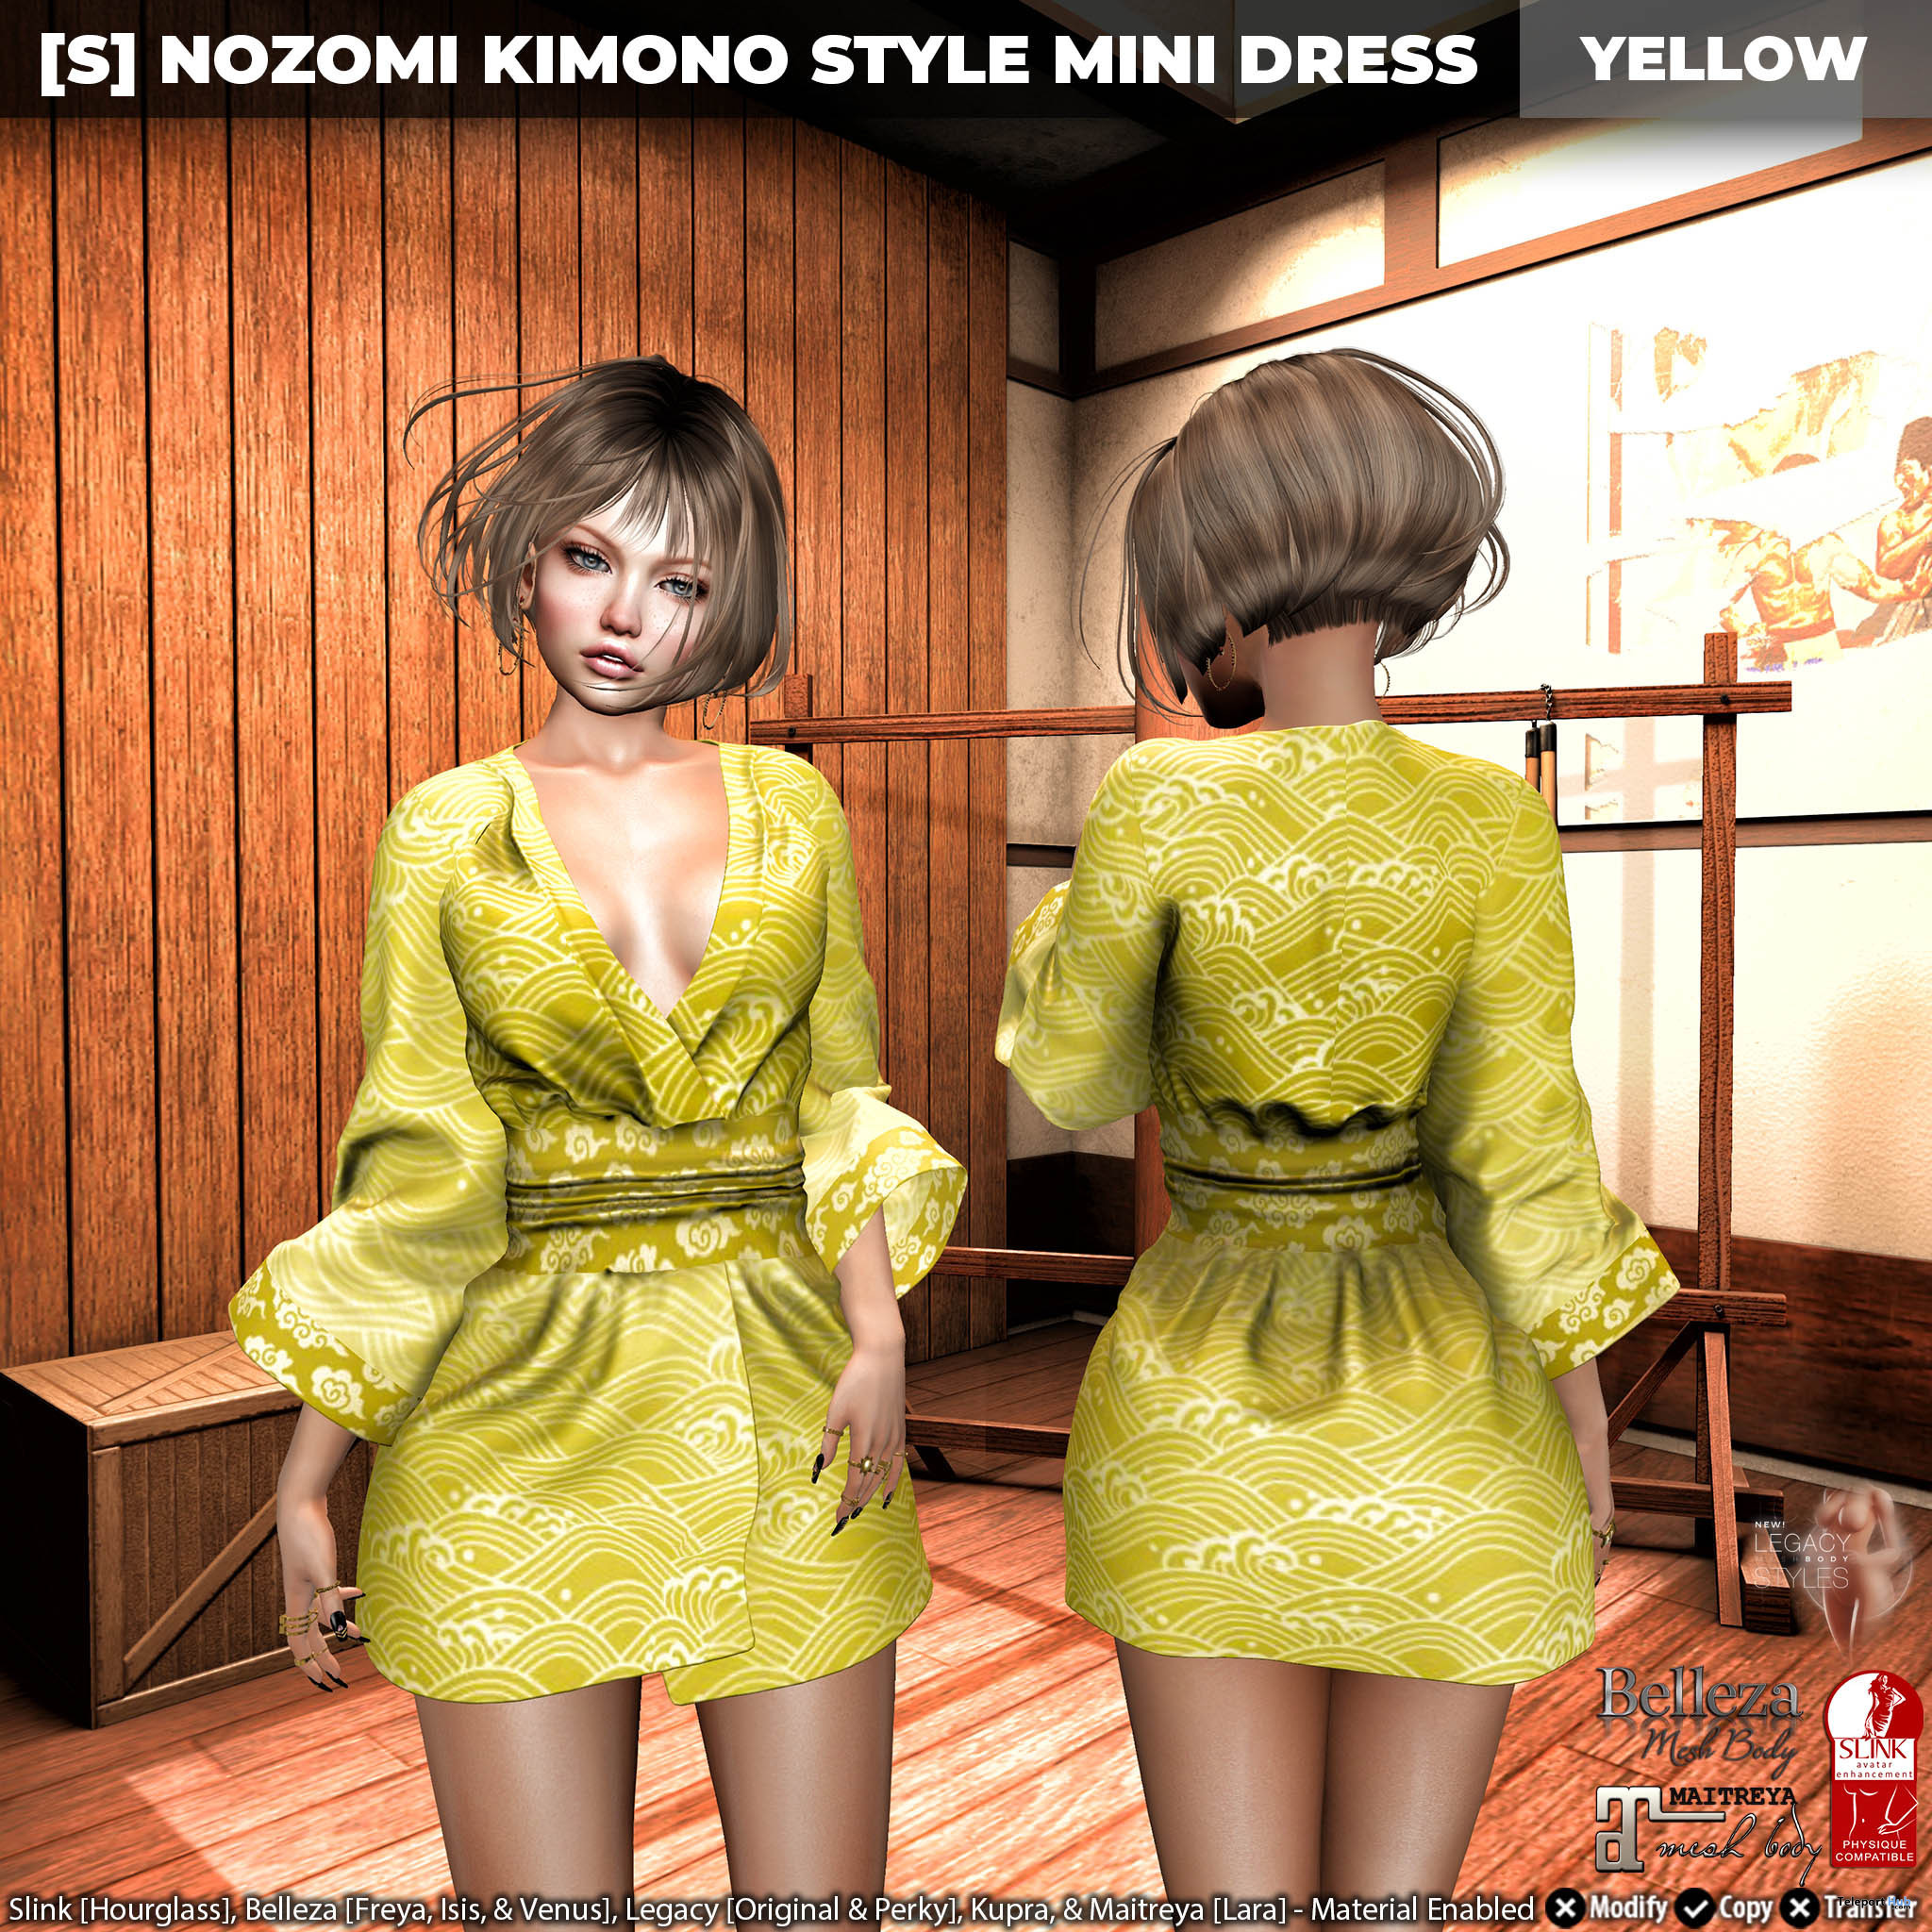 New Release: [S] Nozomi Kimono Style Mini Dress by [satus Inc